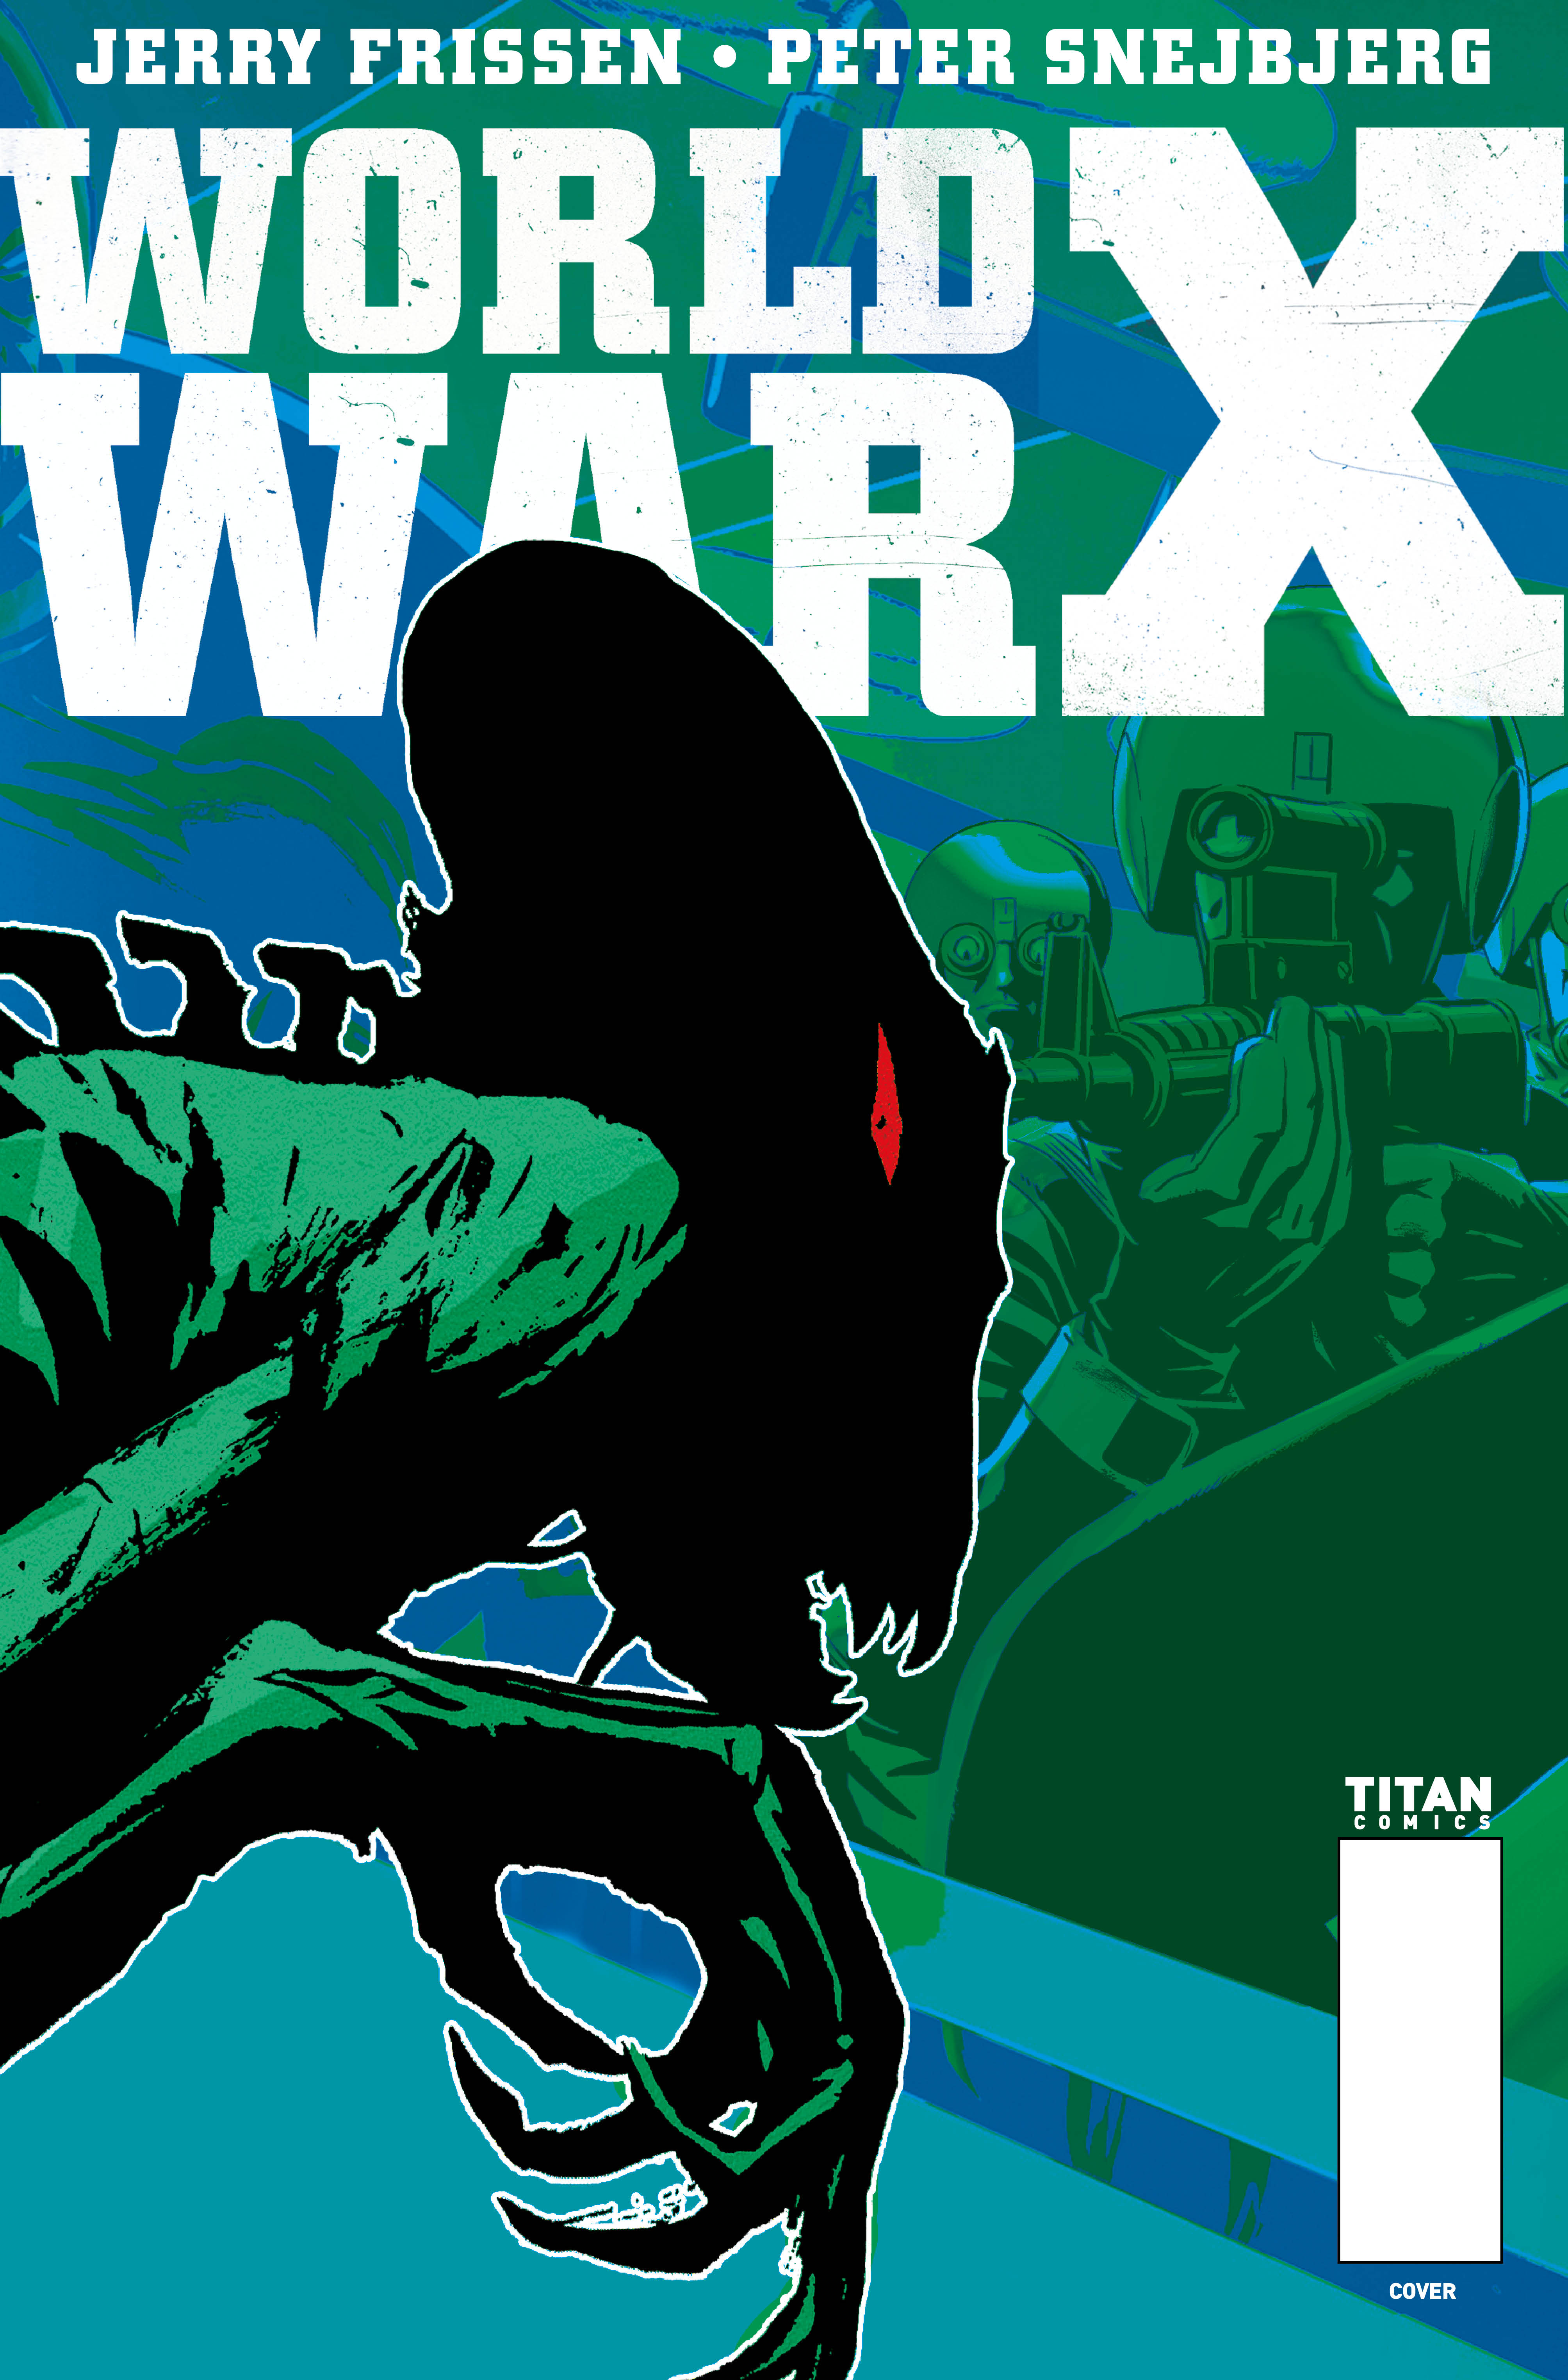 Titan Preview: World War X #1